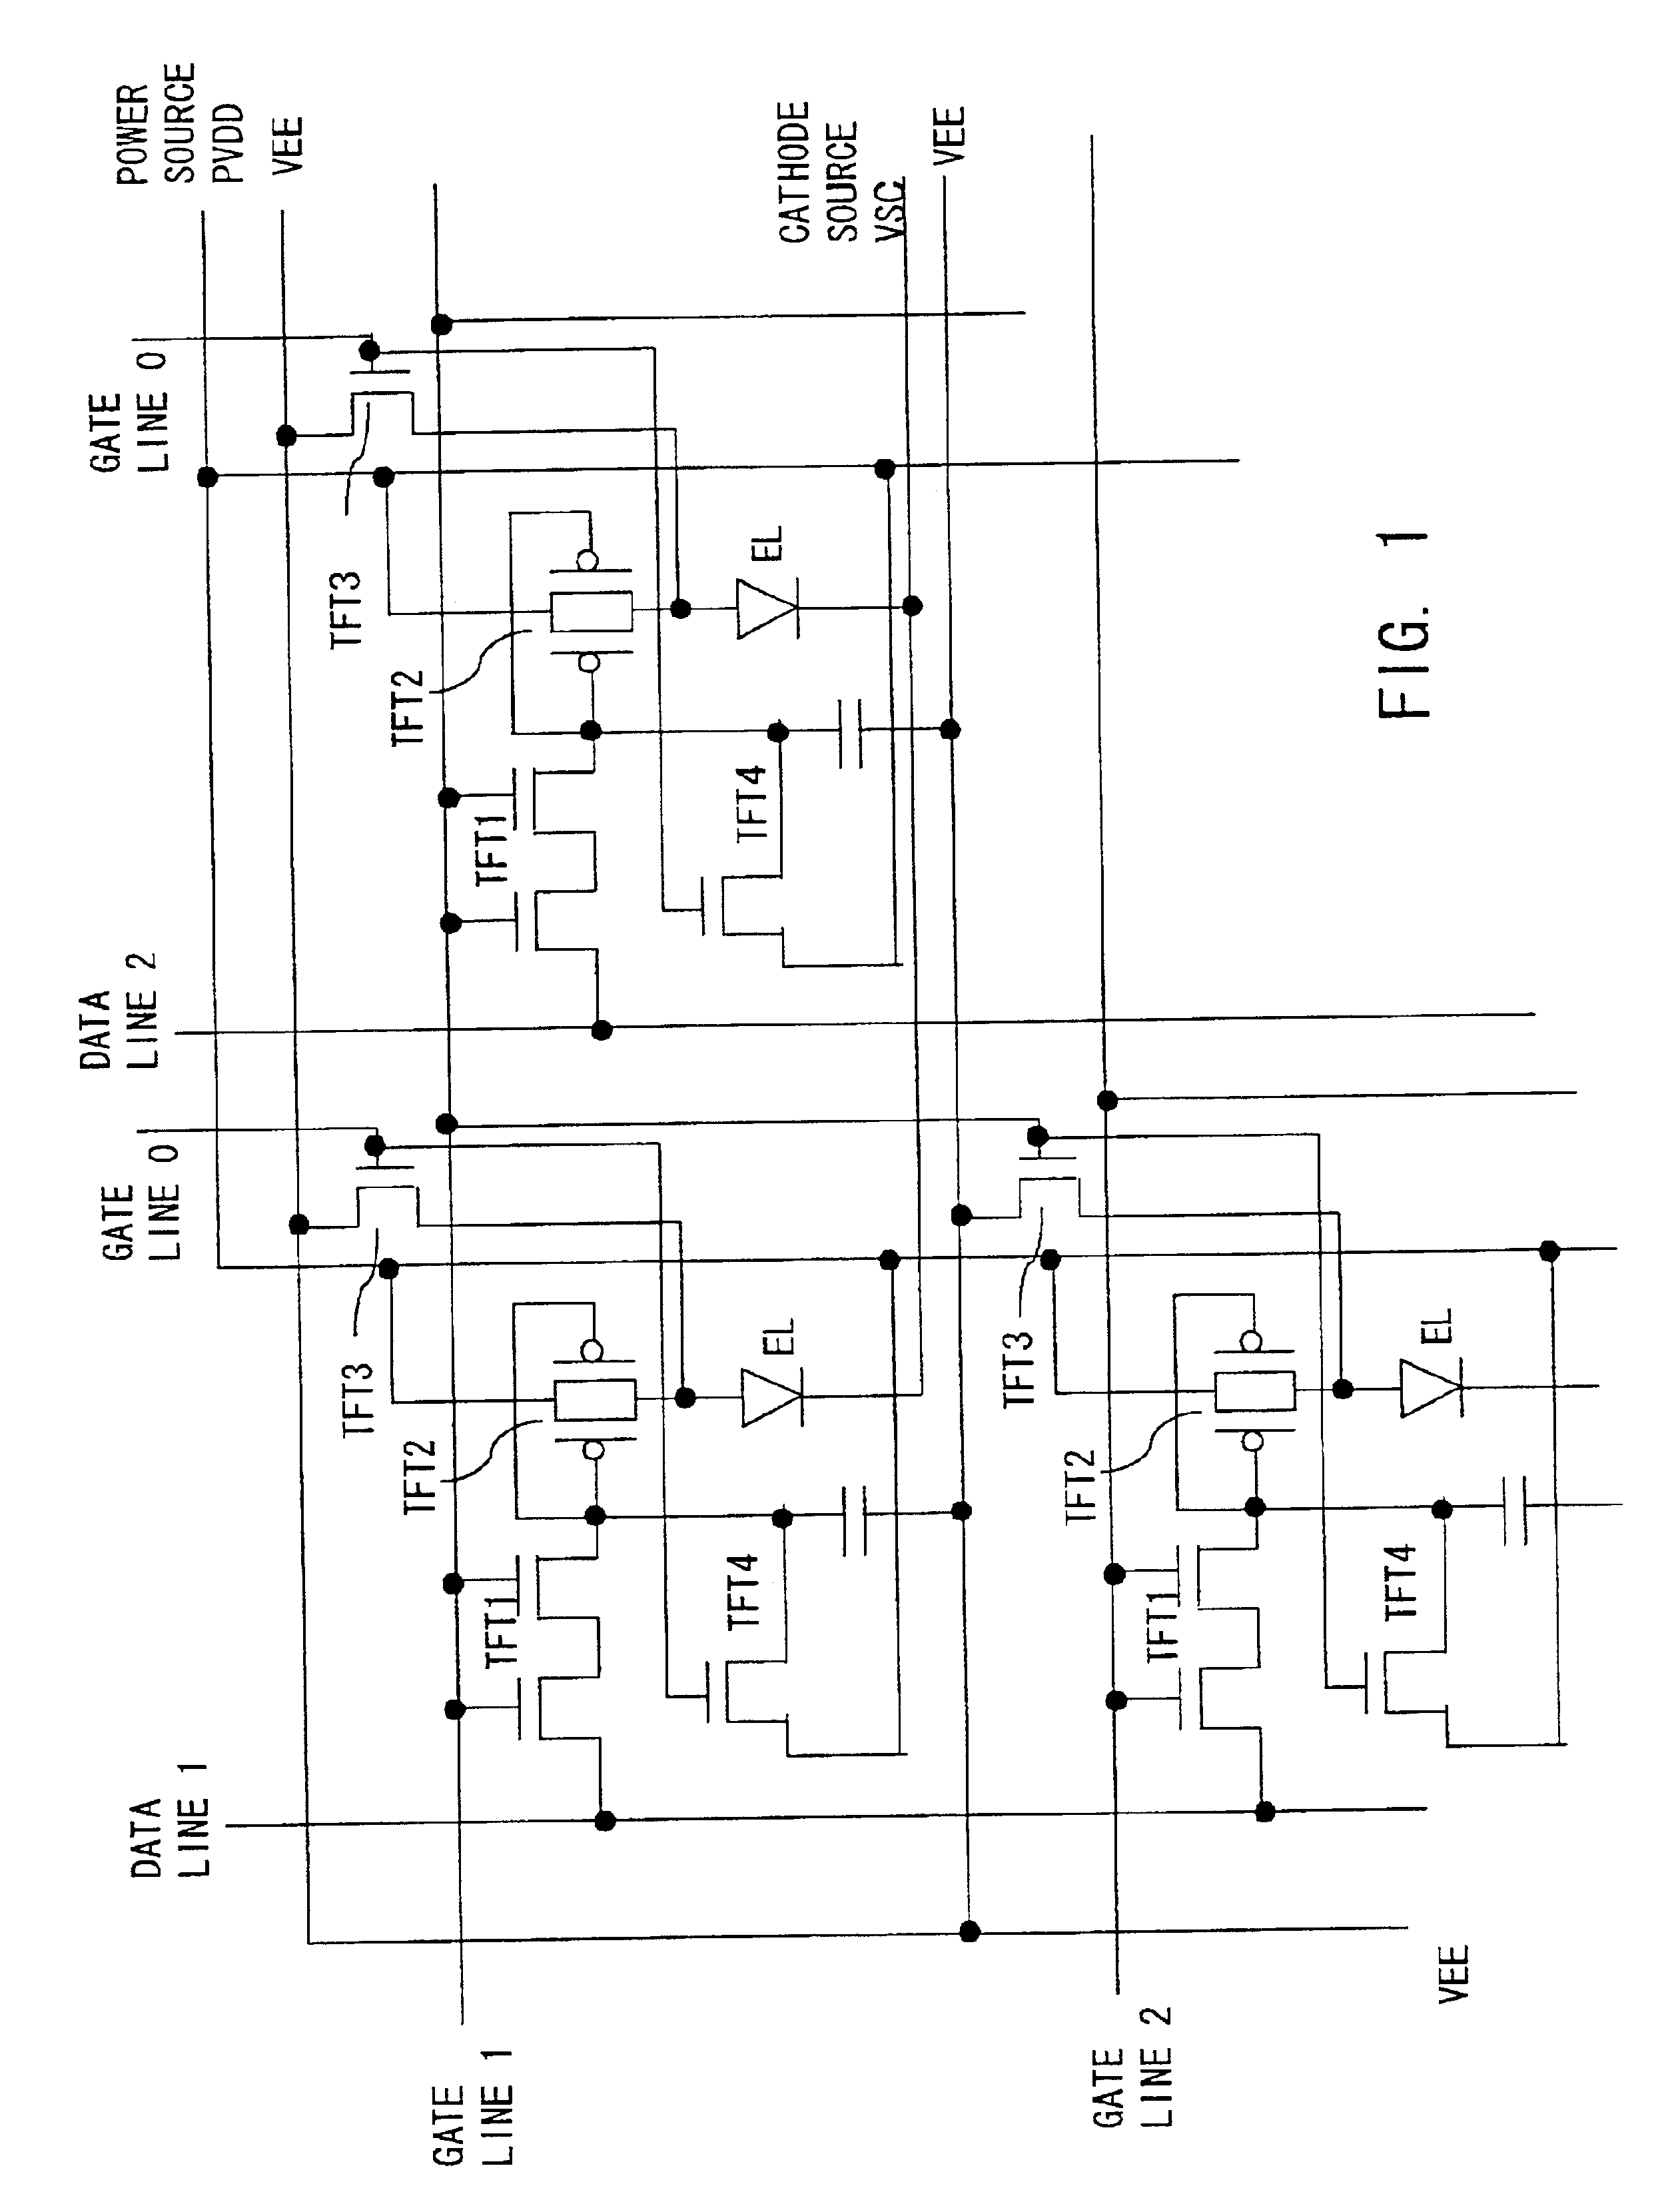 Organic EL pixel circuit